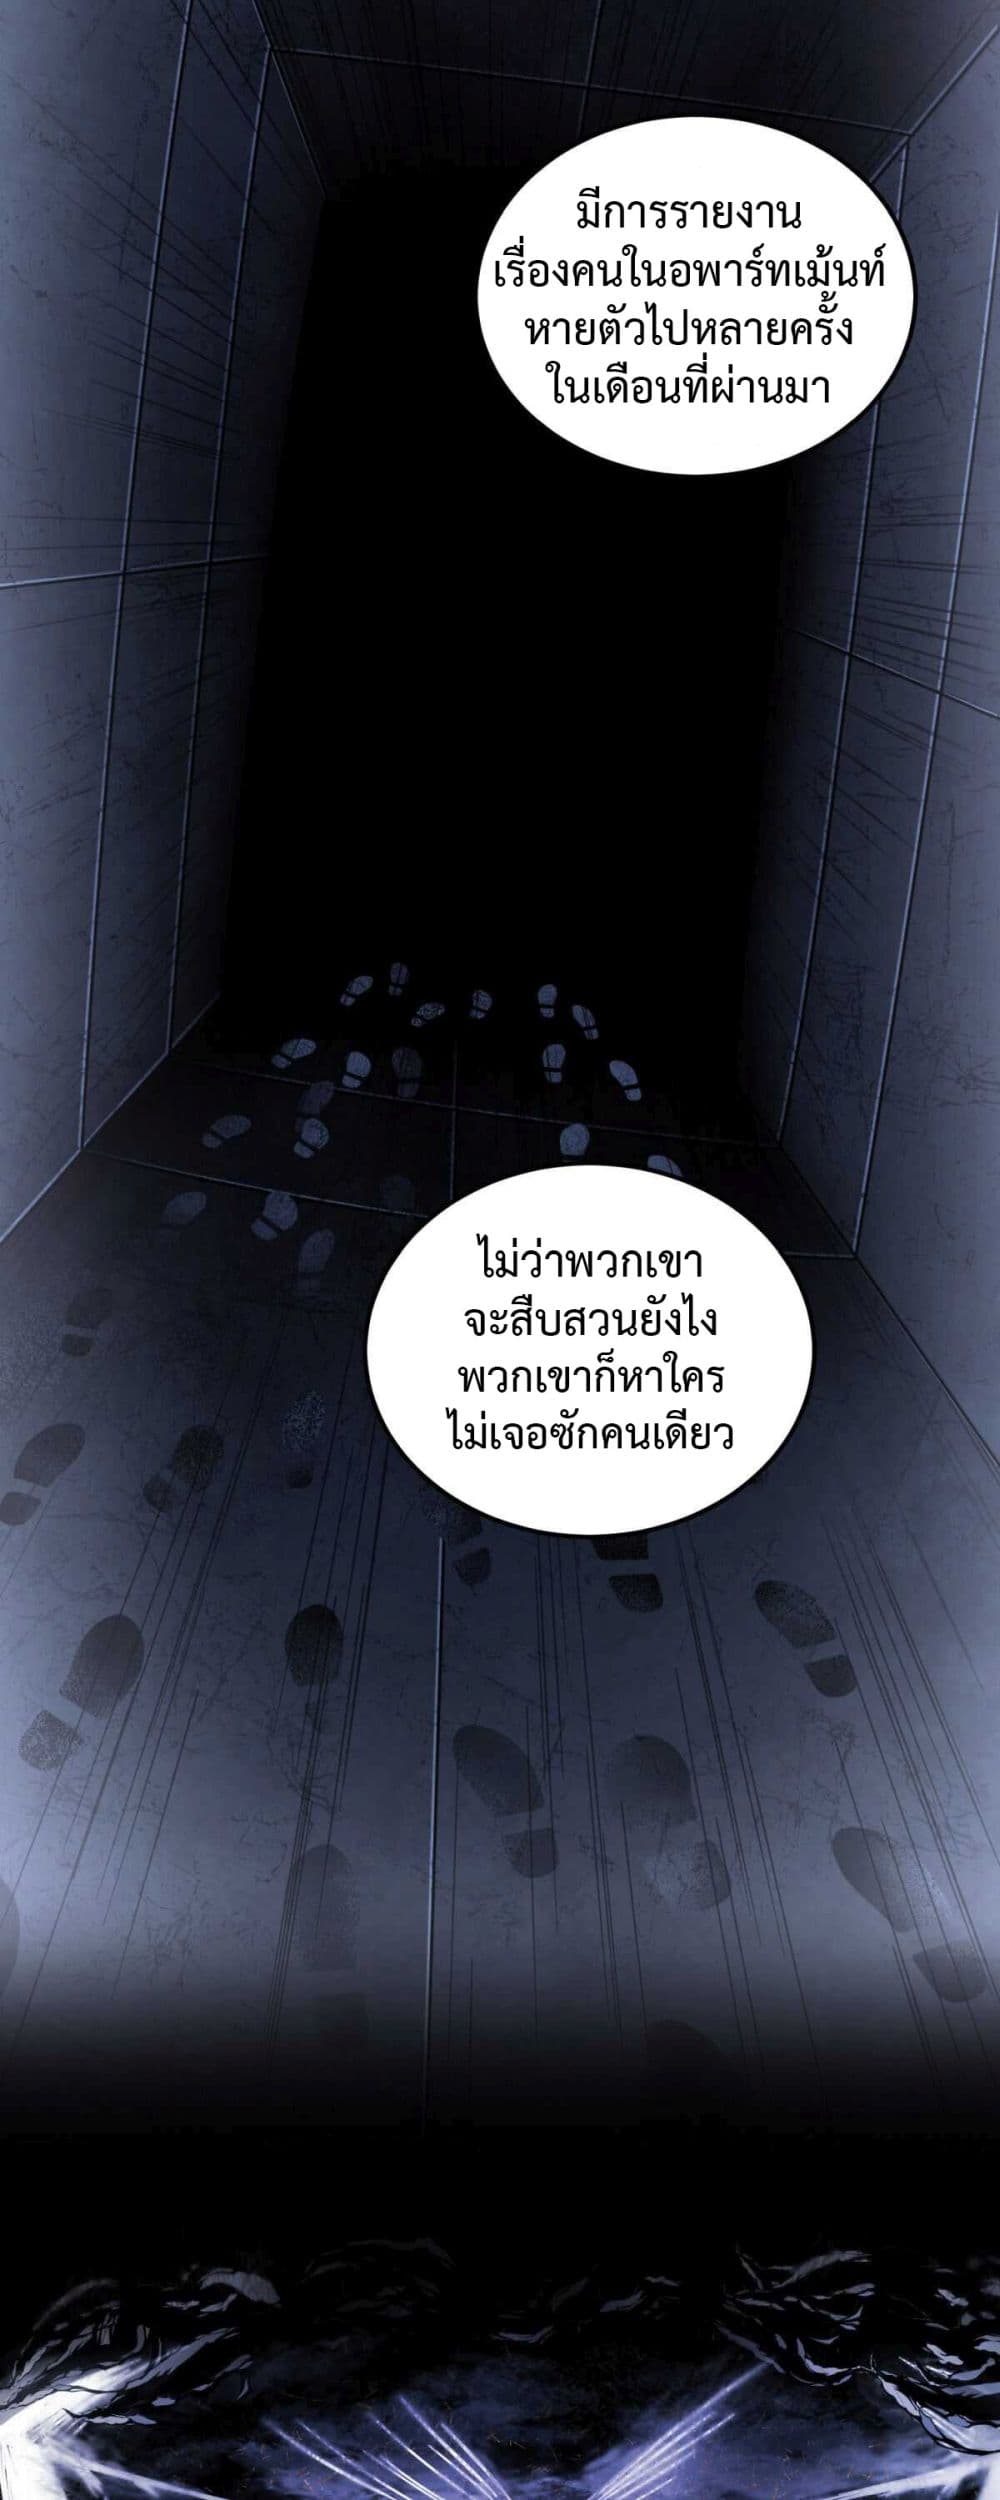 Anemone Dead or Alive 3 (31)